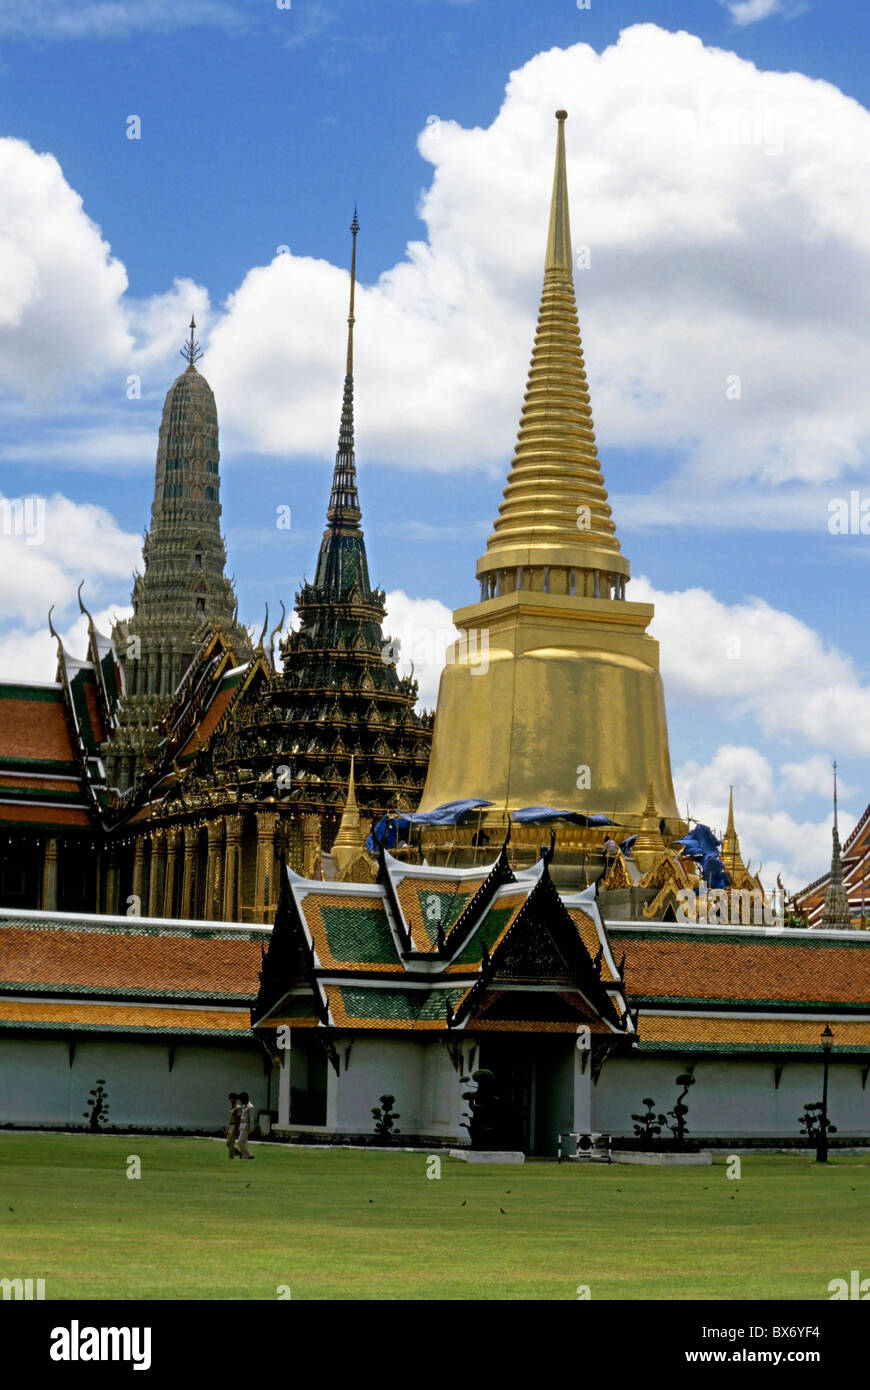 Il Tempio del Buddha di Smeraldo o Wat Phra Kaew, Bangkok, Thailandia. Foto Stock